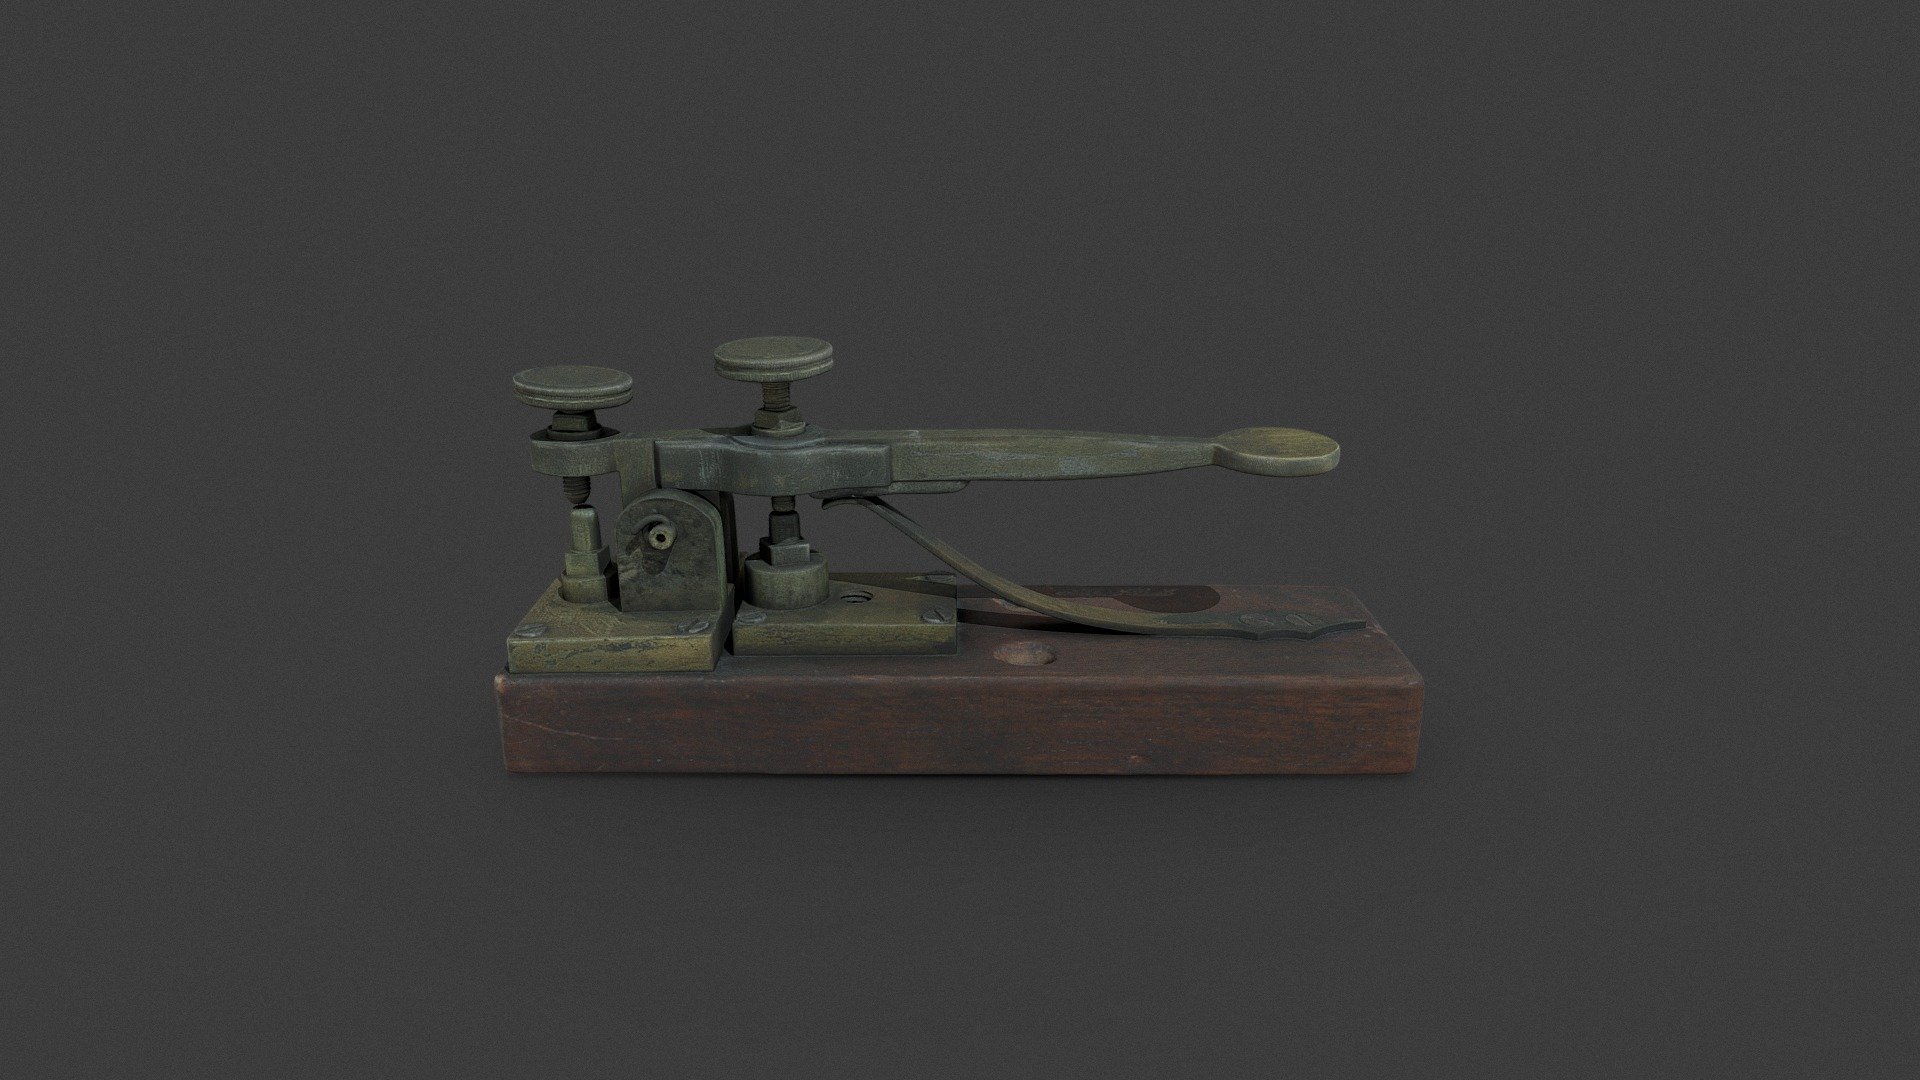 Morse-Vail Telegraph Key